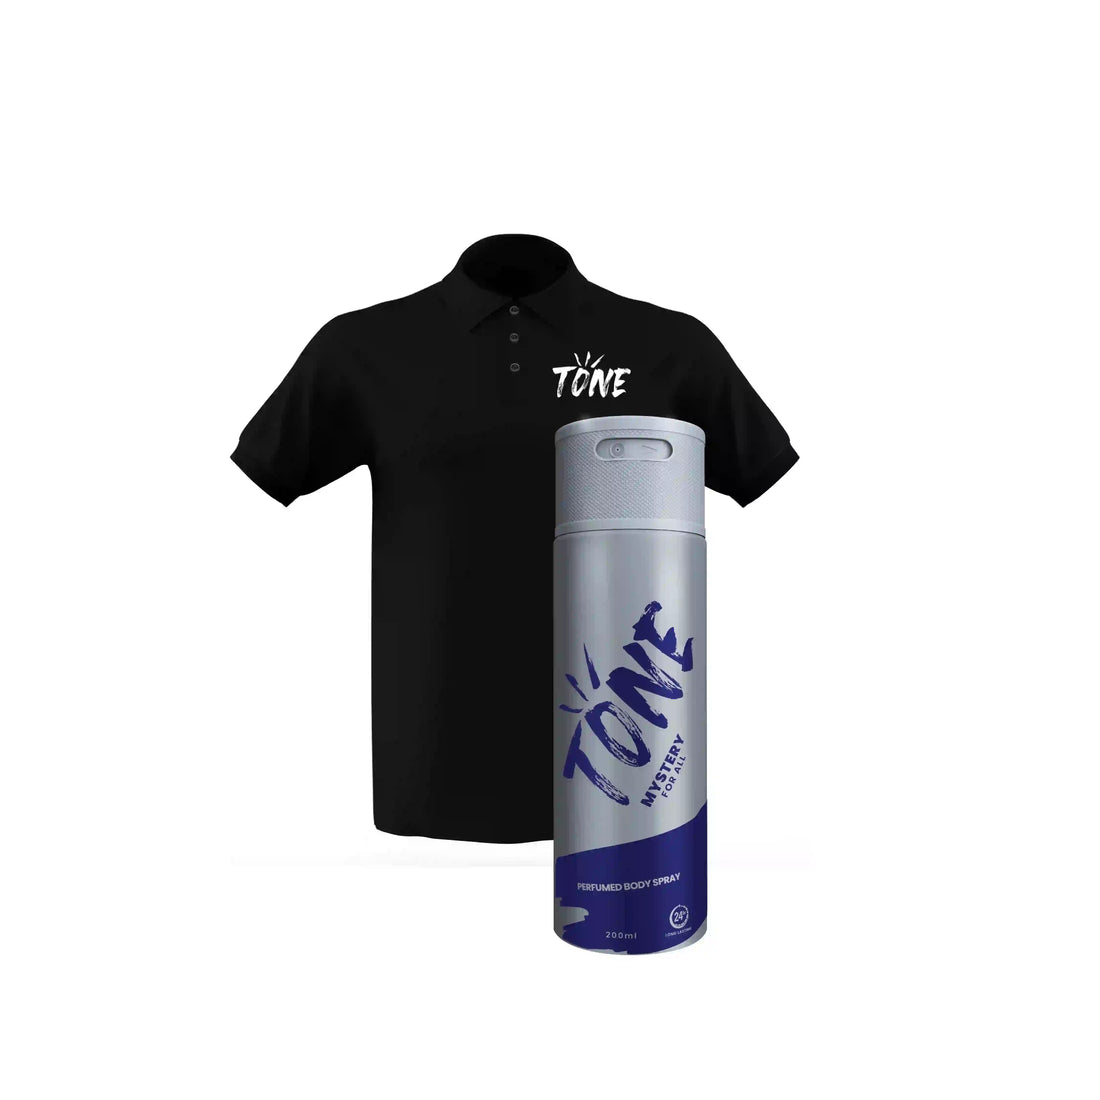 T-Shirt and Tone Body Spray